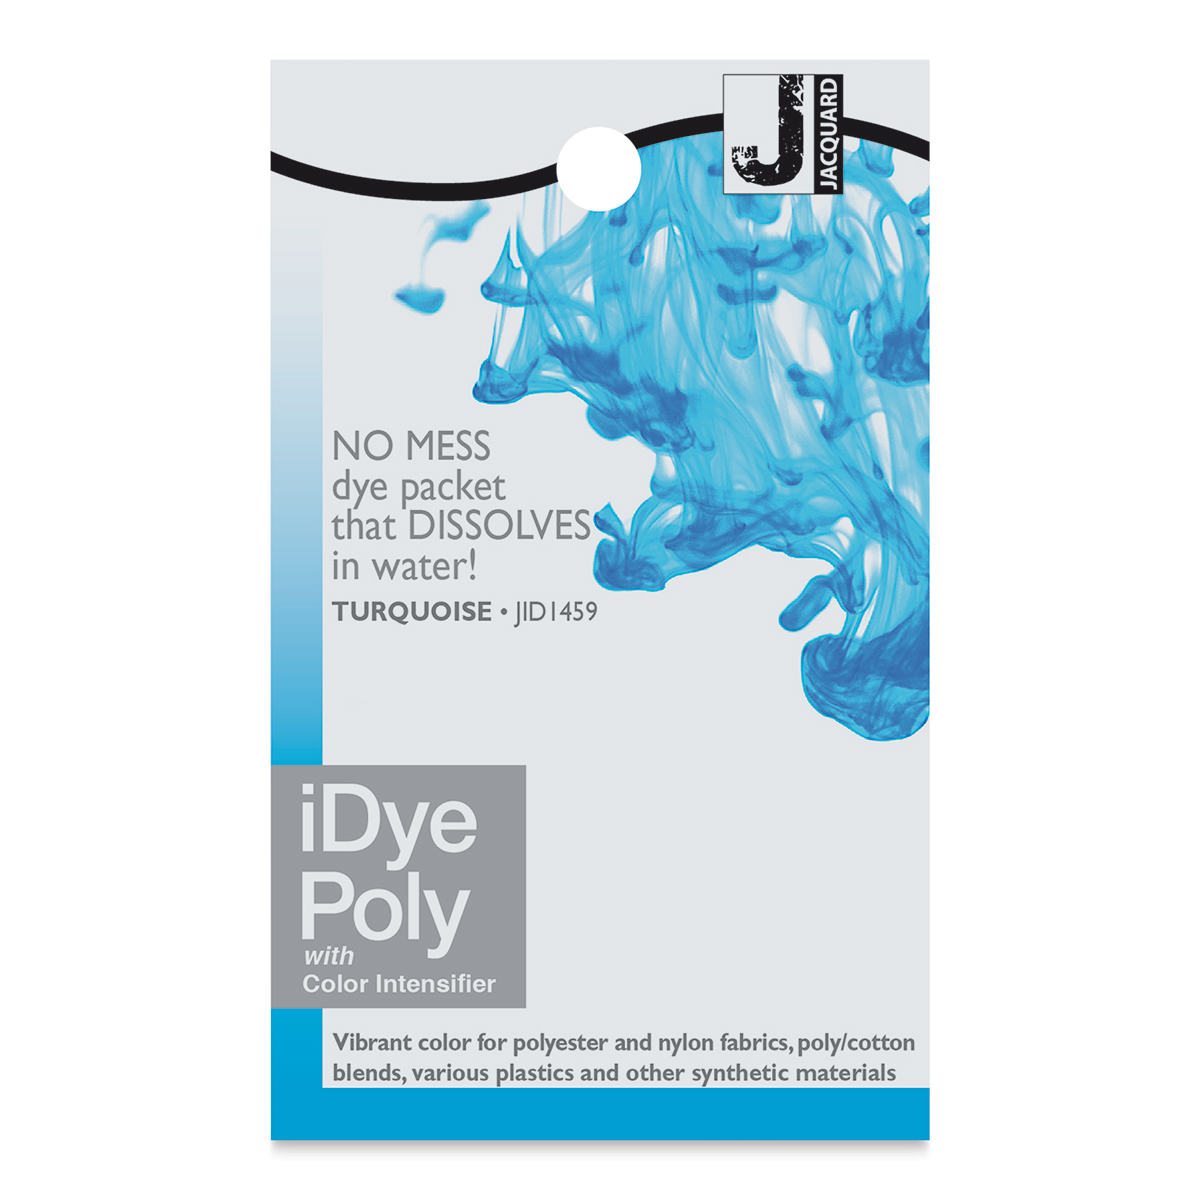 Poly Materials | Jacquard BLICK Polyester/Nylon Art for iDye